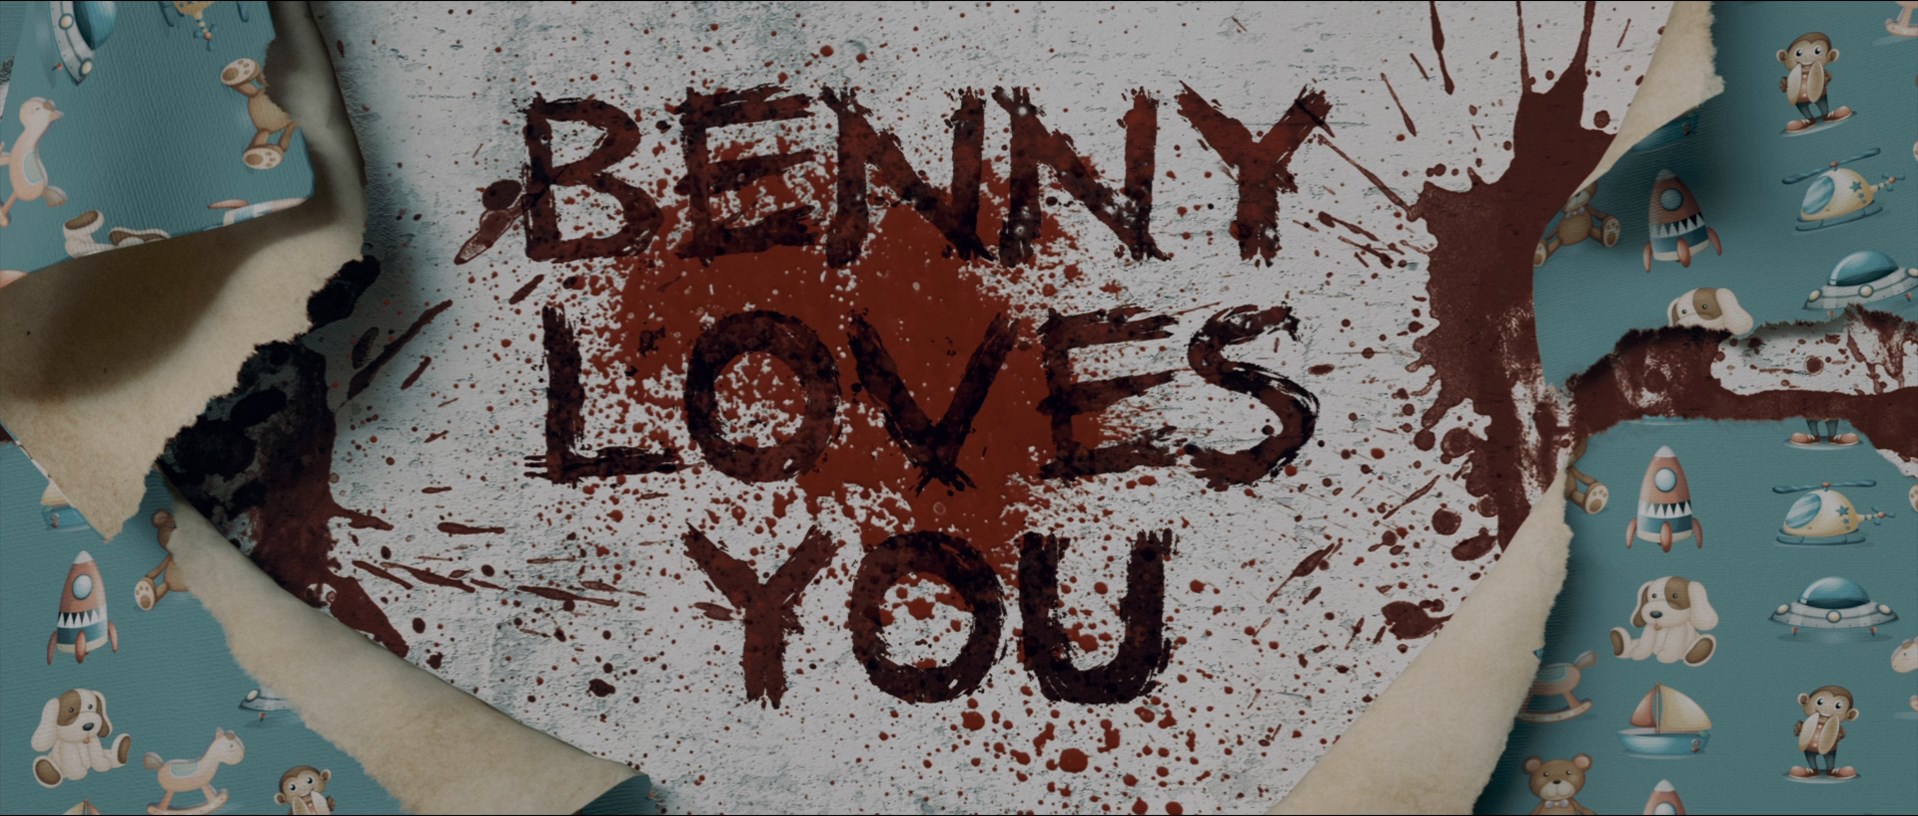 Benny Loves You (2019) 1080p WEB-DL AMZN